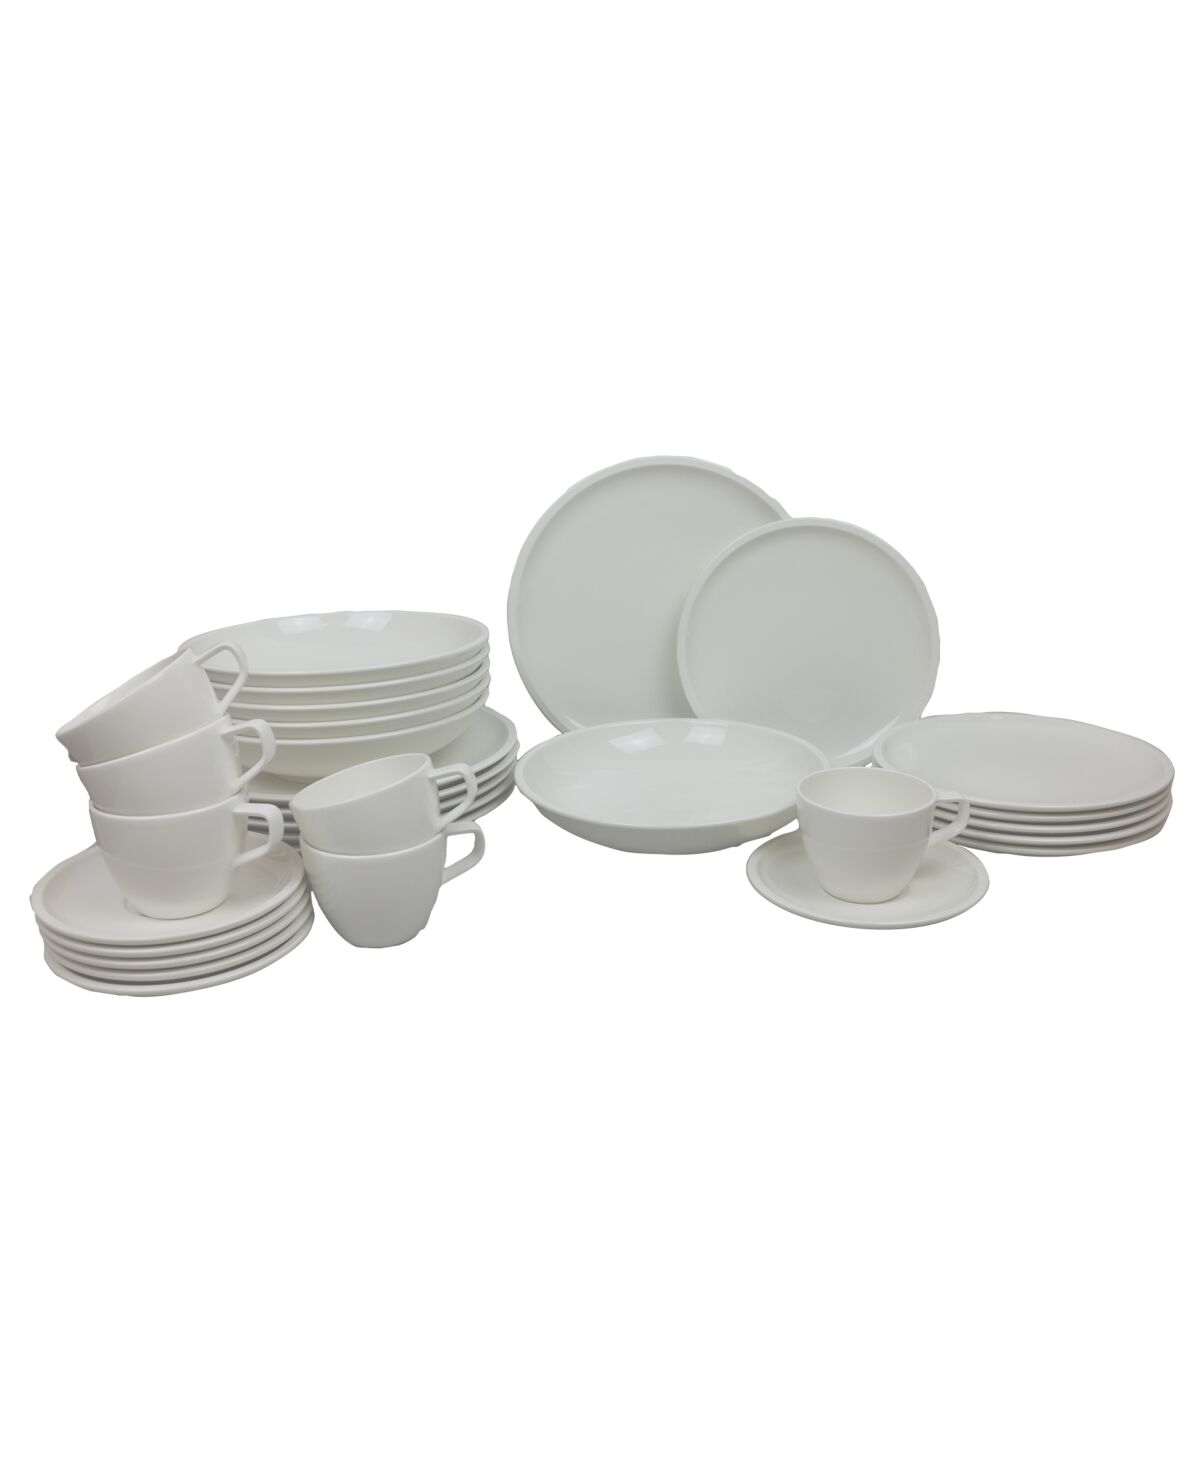 Villeroy & Boch Artesano 30 Pc. Dinnerware Set, Service for 6 - White